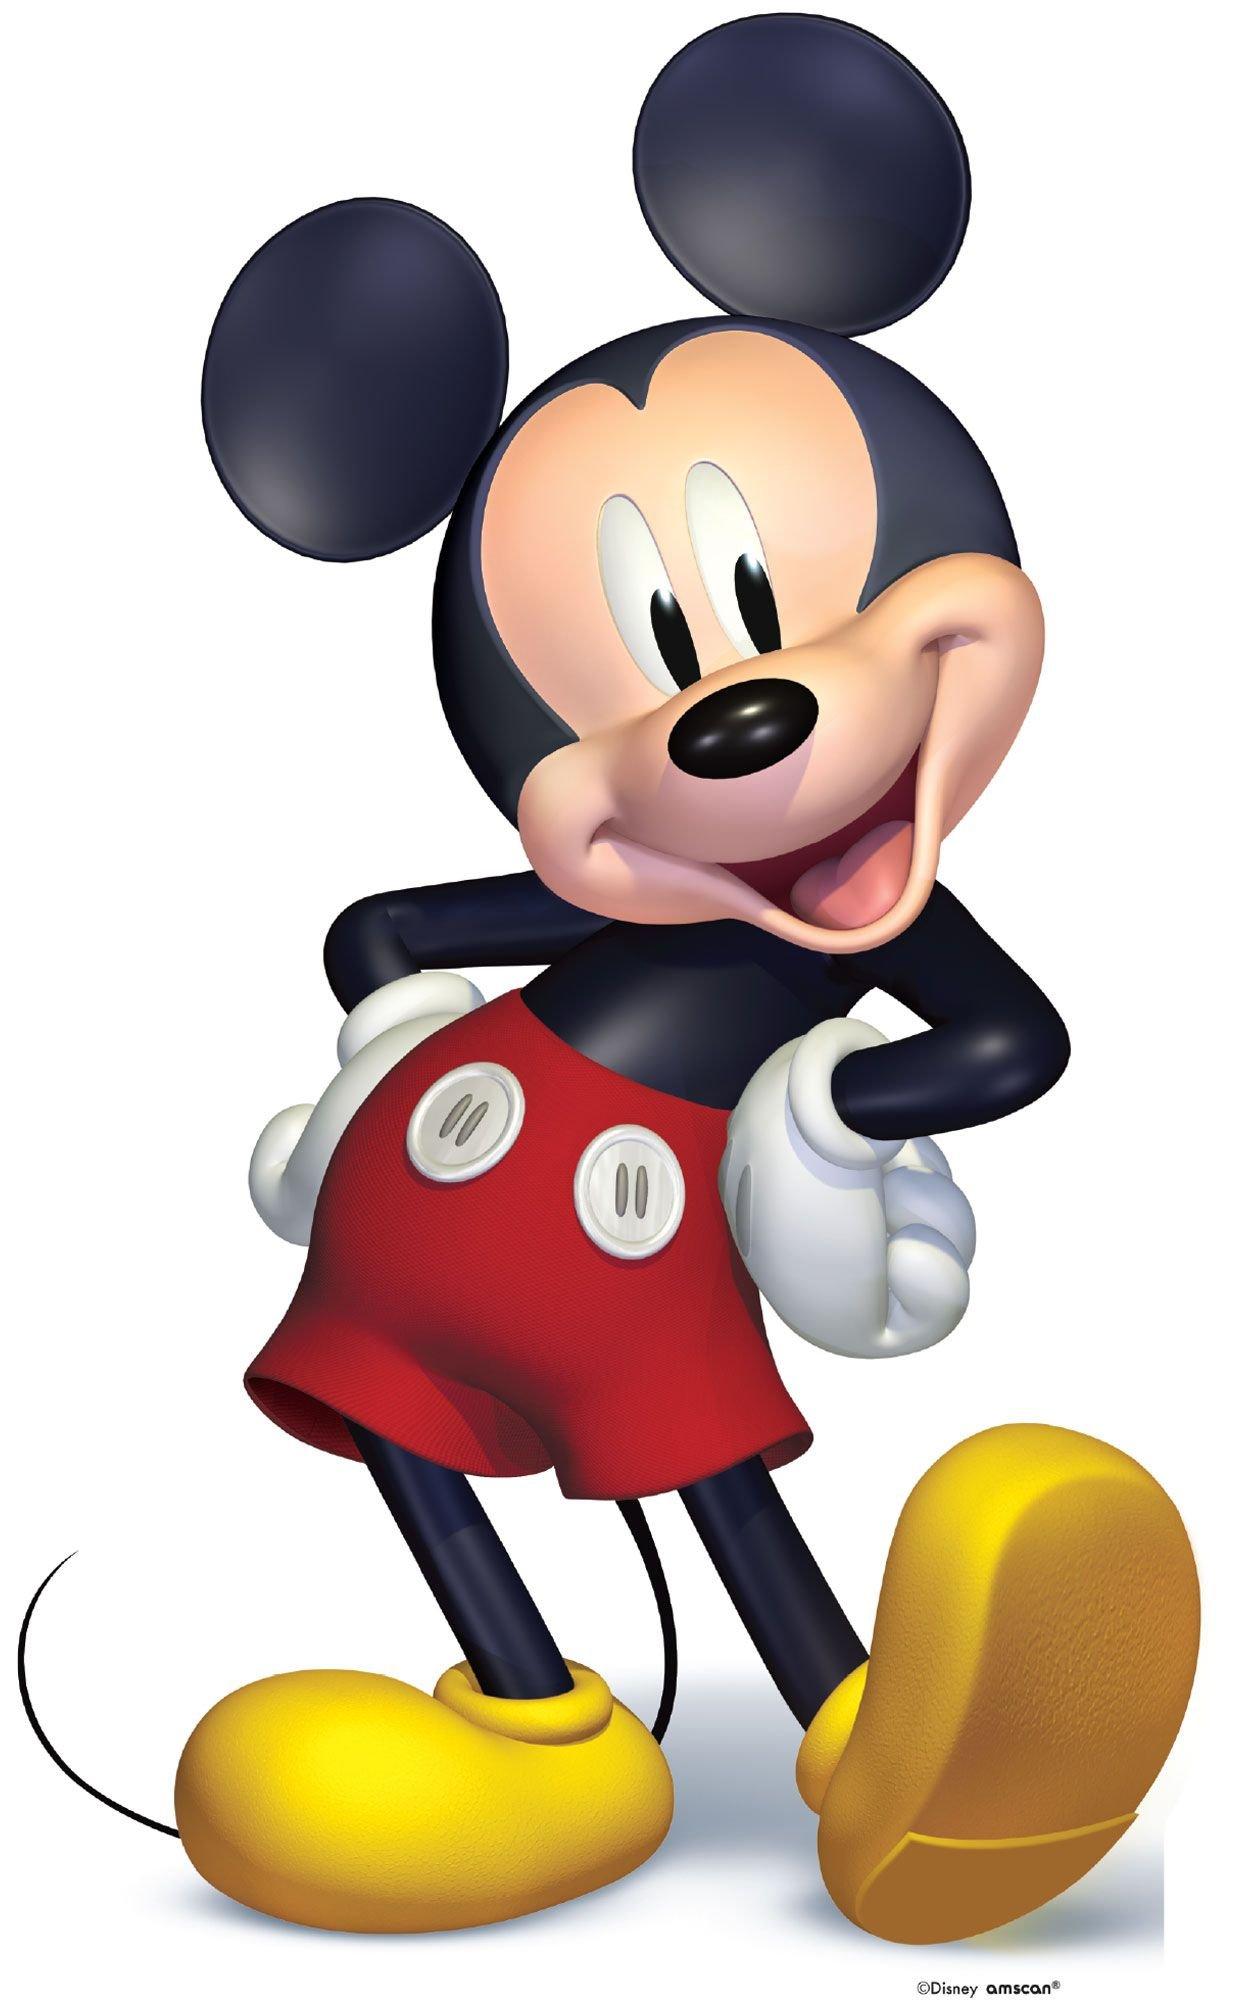 Mickey on the Go Life-Size Cardboard Cutout